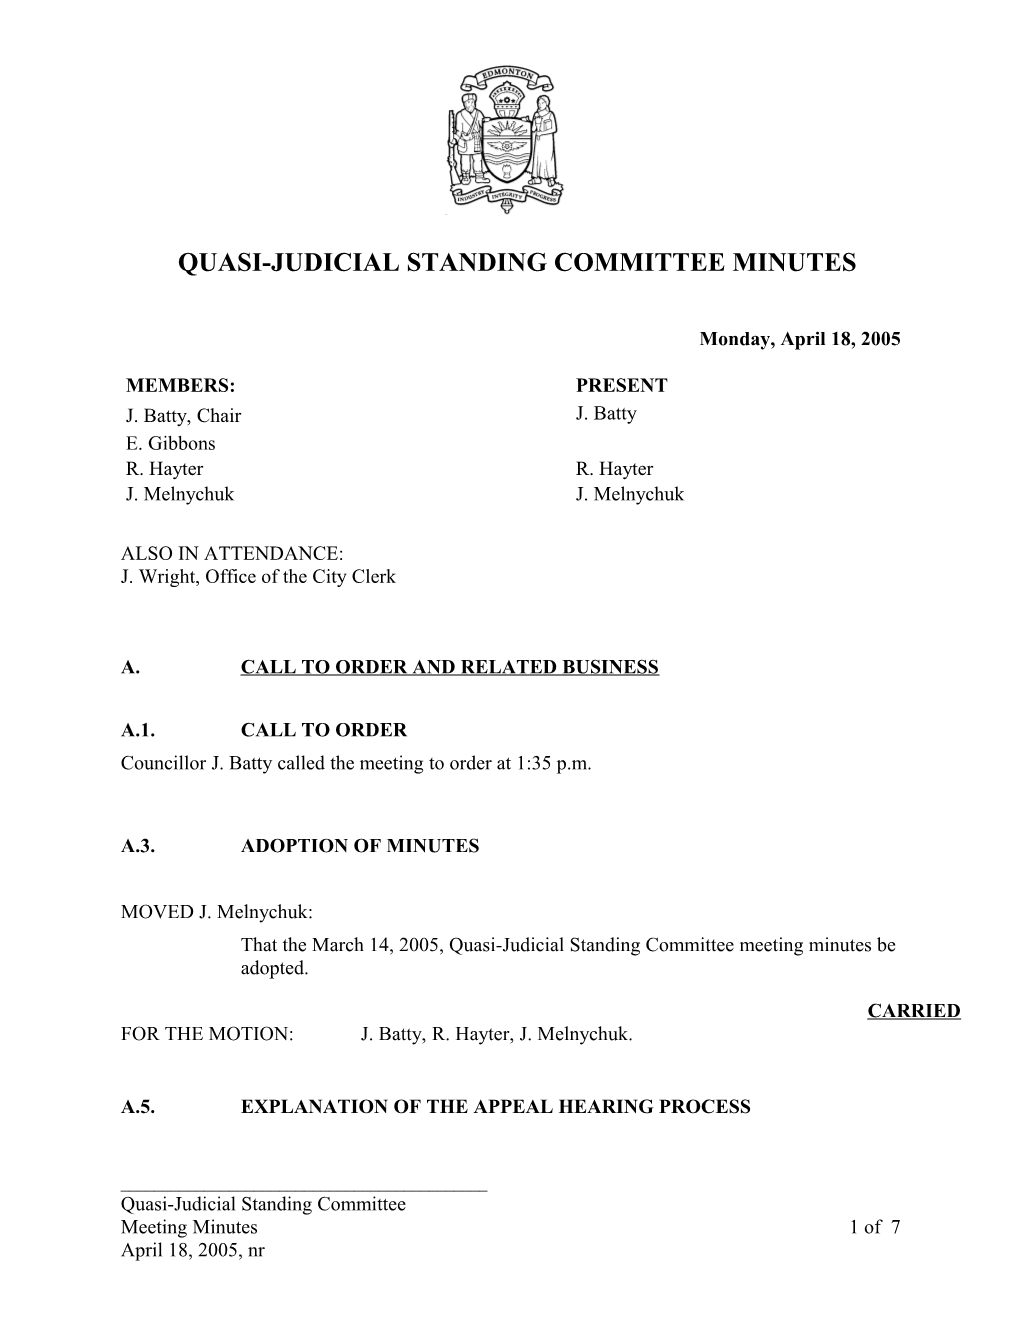 Minutes for Quasi-Judicial Standing Committee April 18, 2005 Meeting